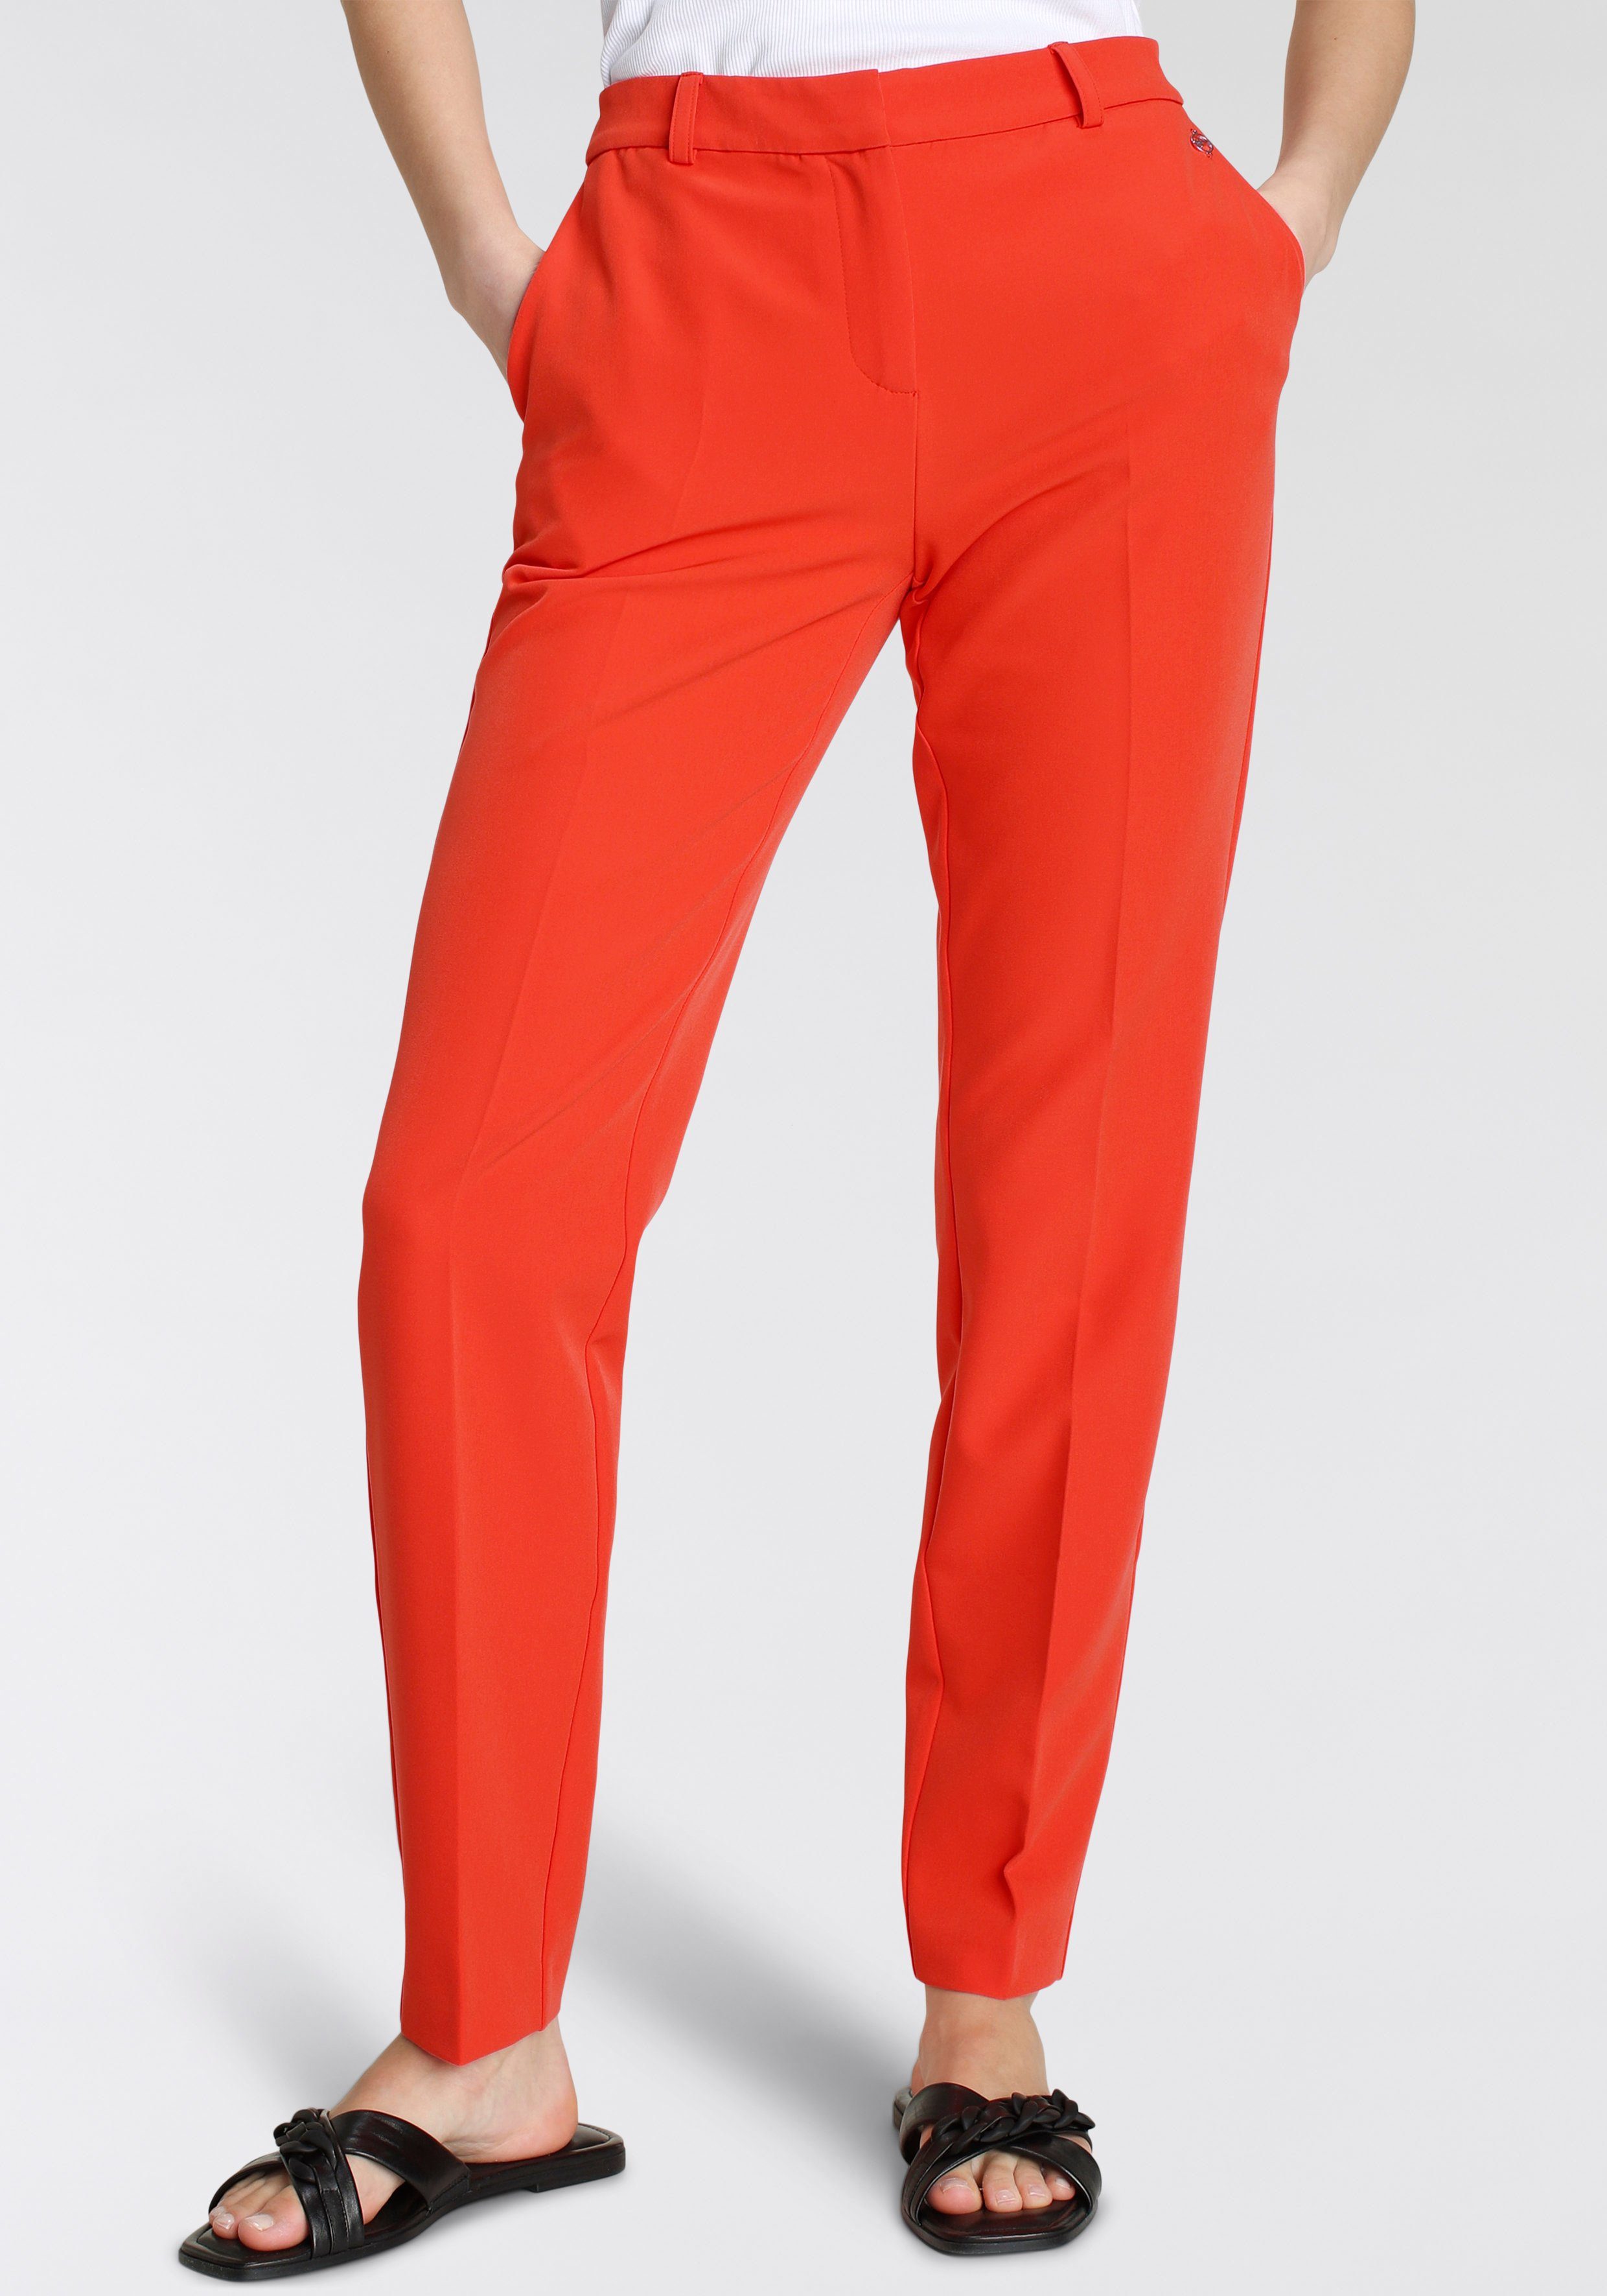 Tamaris Anzughose in Trendfarben orange (Hose aus nachhaltigem Material) | Stretchhosen